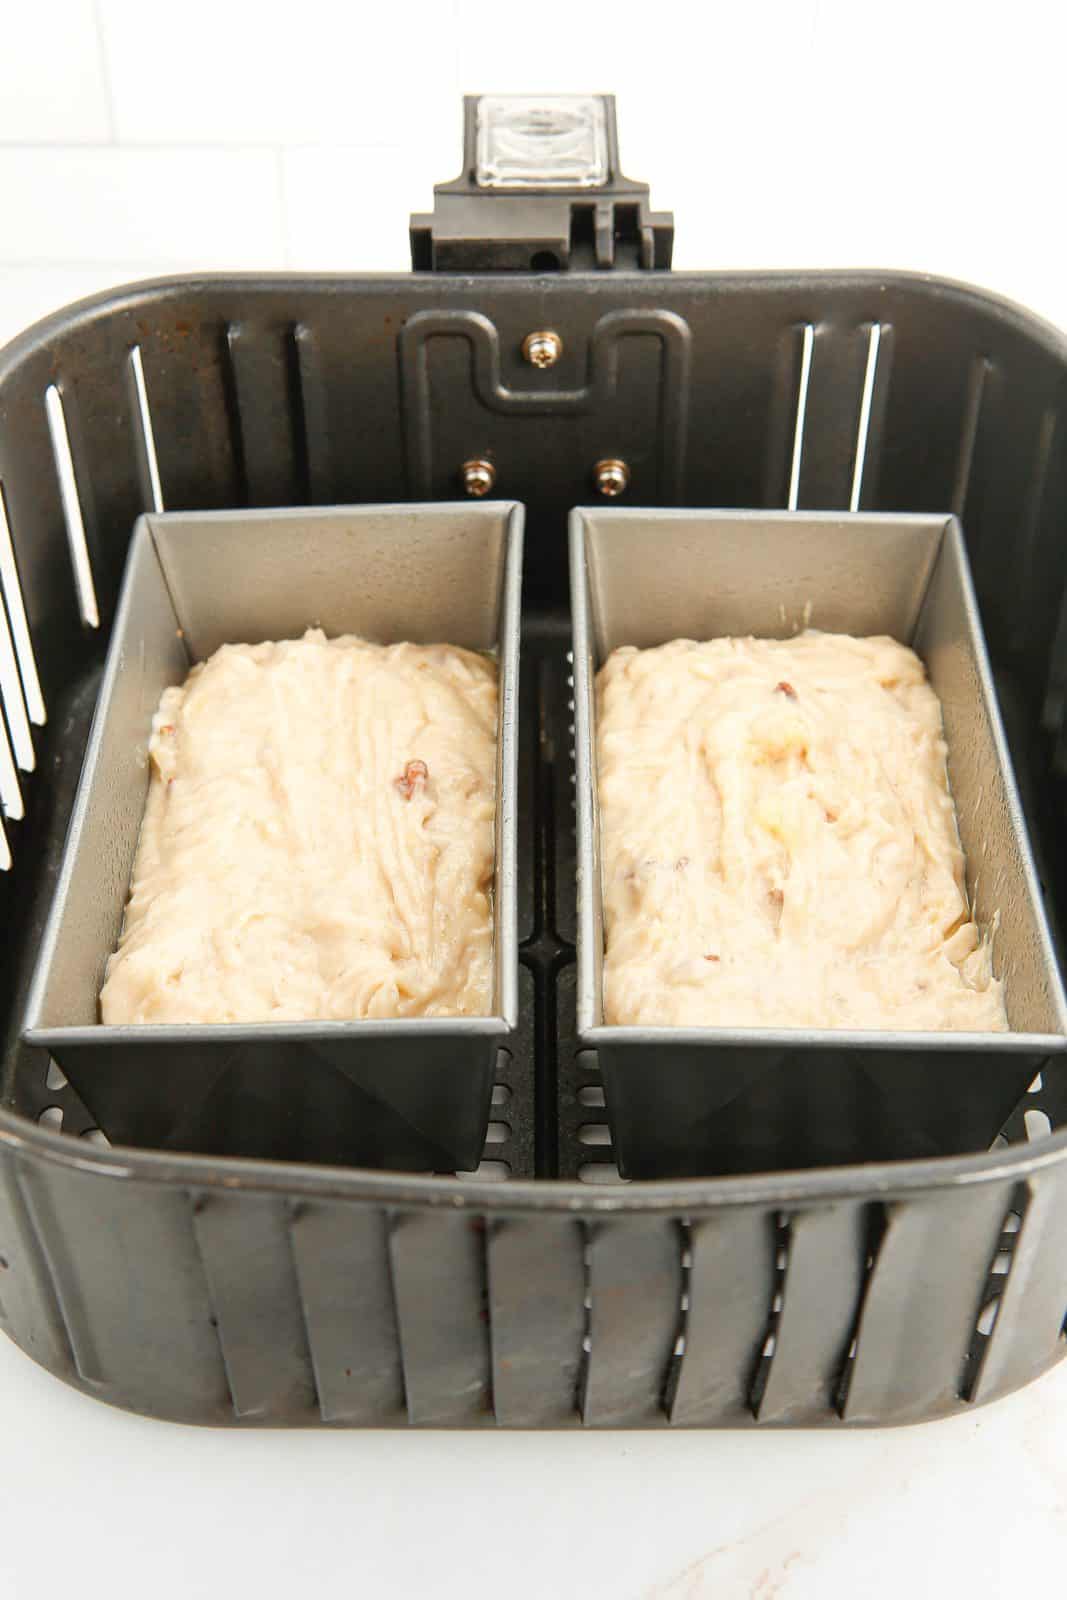 Batter added to mini loaf pans in air fryer basket.